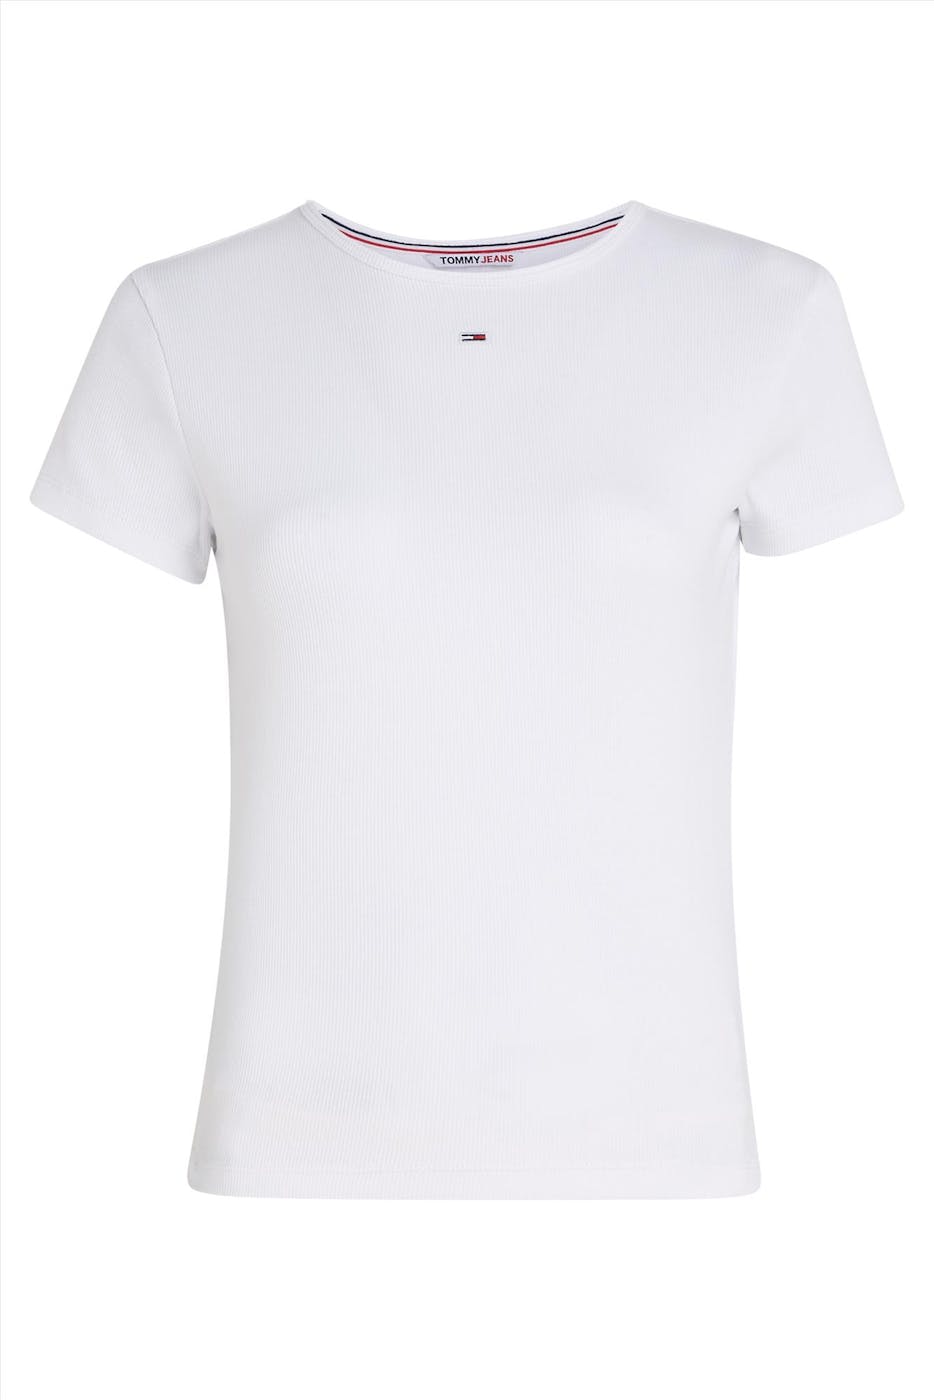 Tommy Jeans - Witte Geribde T-shirt